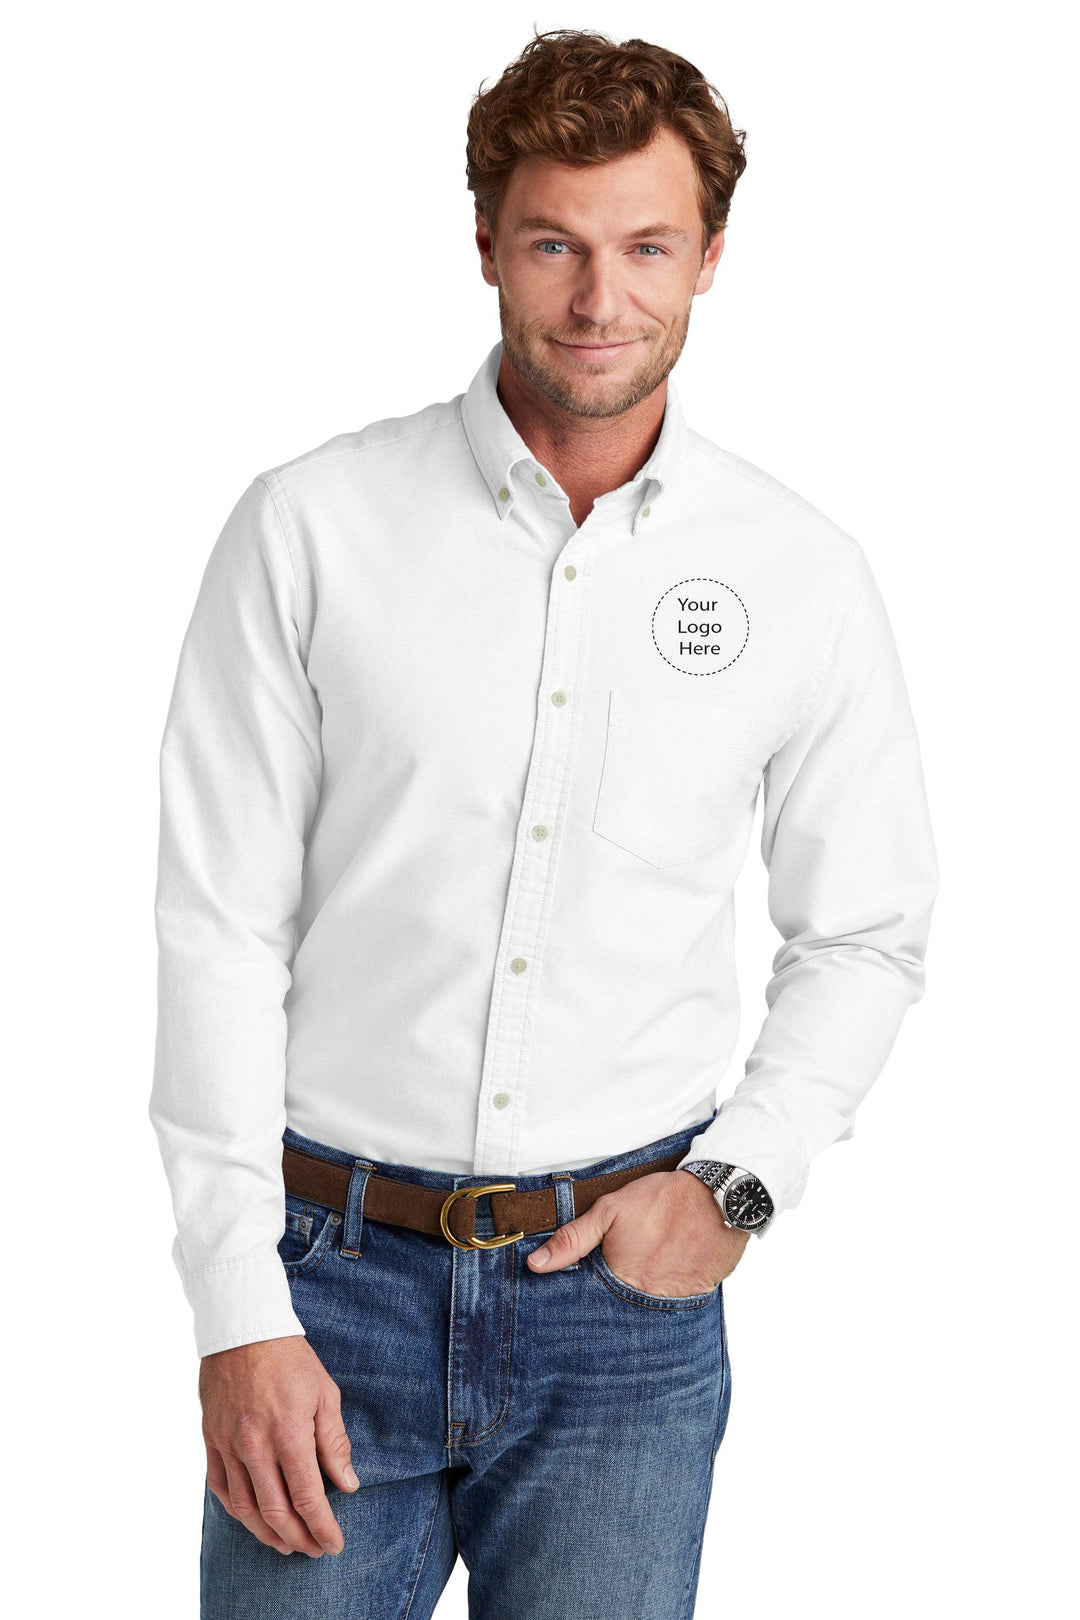 Keller Williams NEW KW-BB18004 Brooks Brothers® Casual Oxford Cloth Shirt 